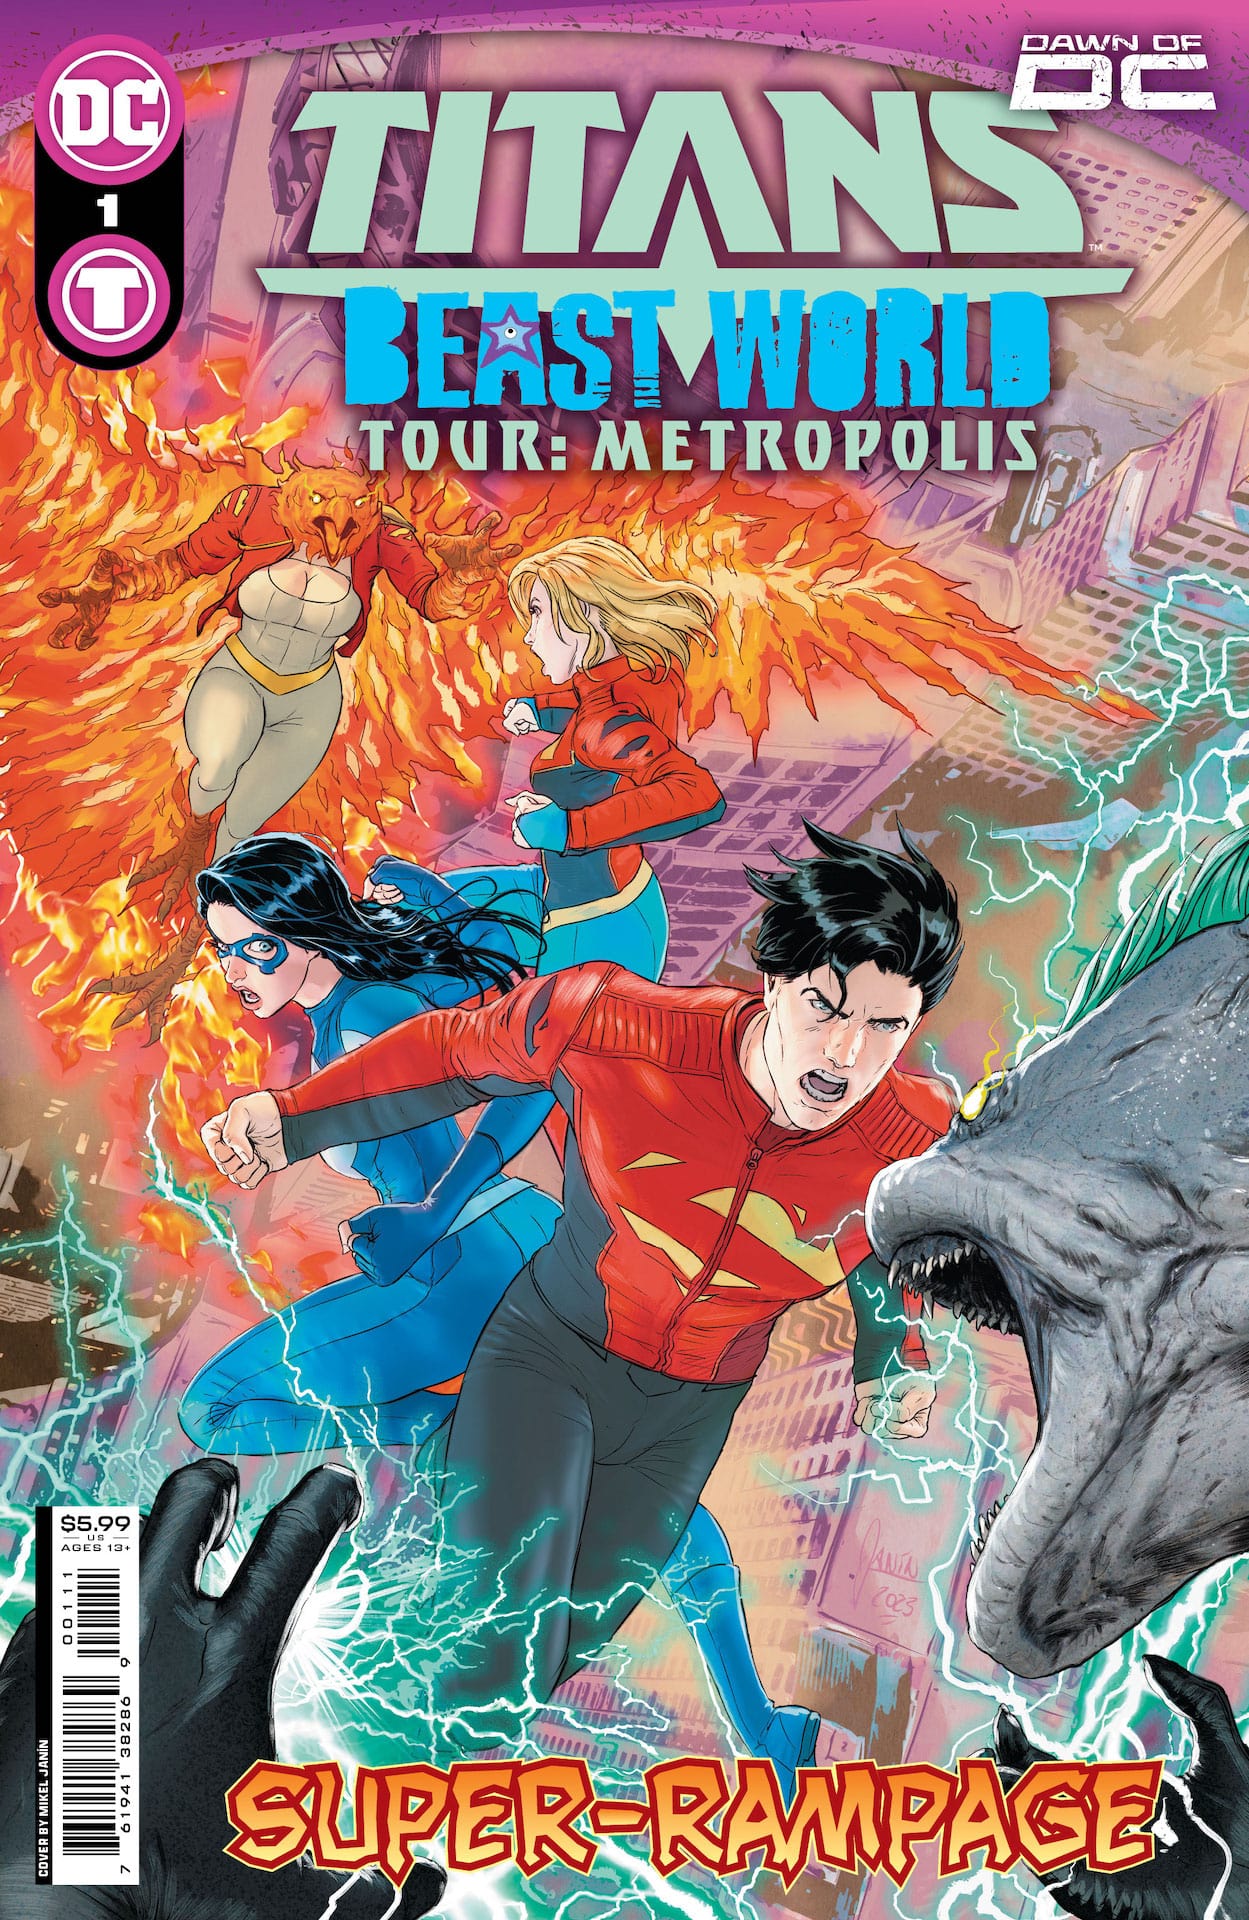 DC Preview: Titans: Beast World Tour - Metropolis #1